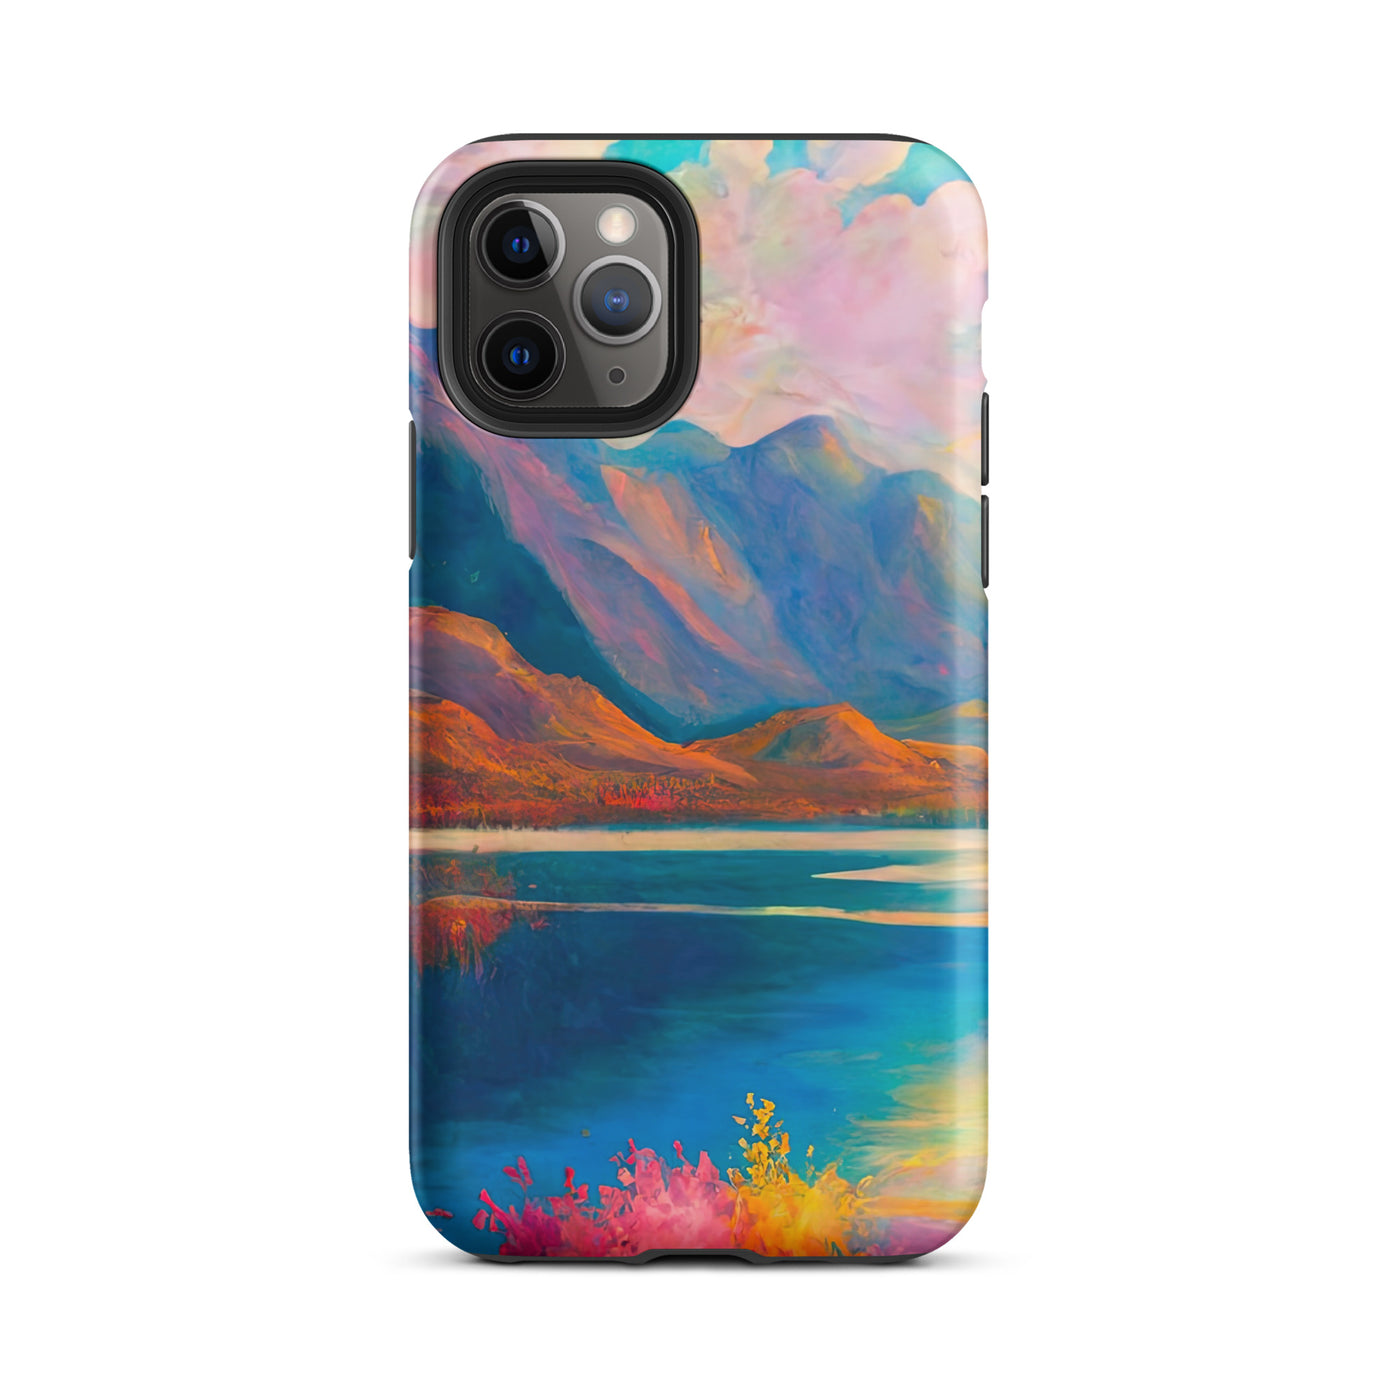 Berglandschaft und Bergsee - Farbige Ölmalerei - iPhone Schutzhülle (robust) berge xxx iPhone 11 Pro